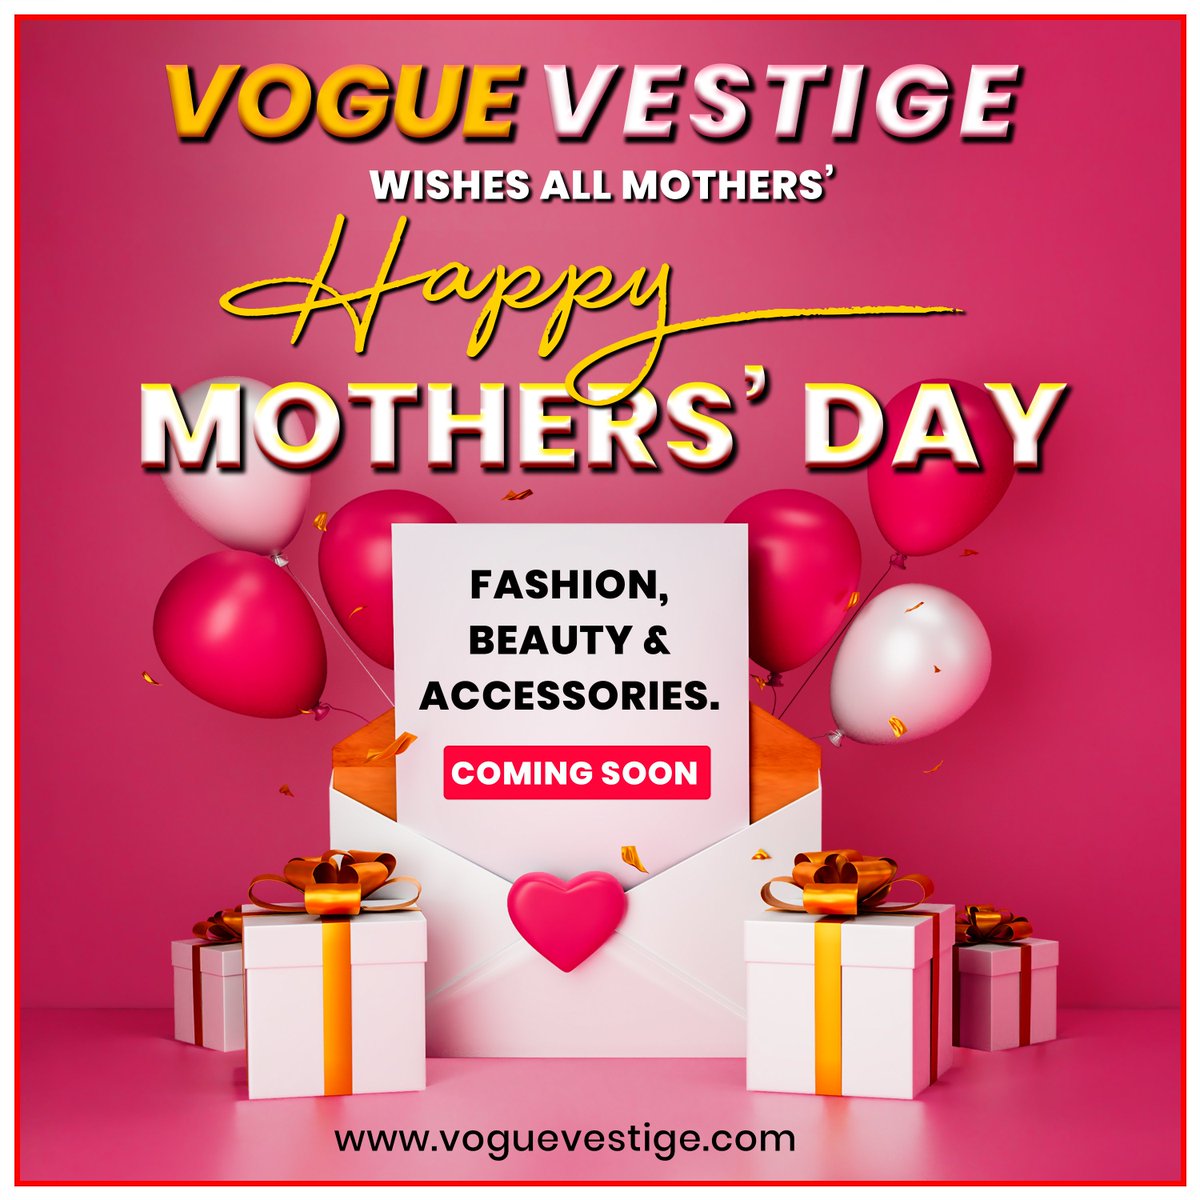 Here's to the timeless elegance and boundless strength of all mothers. Happy Mother's Day from Vogue Vestige. 📷
#momstyle #momlove #MothersDayJoy #MomAppreciation #MotherhoodMagic #GratefulForMom #mommoments #momlifebestlife #ThankYouMom #supermomcelebration